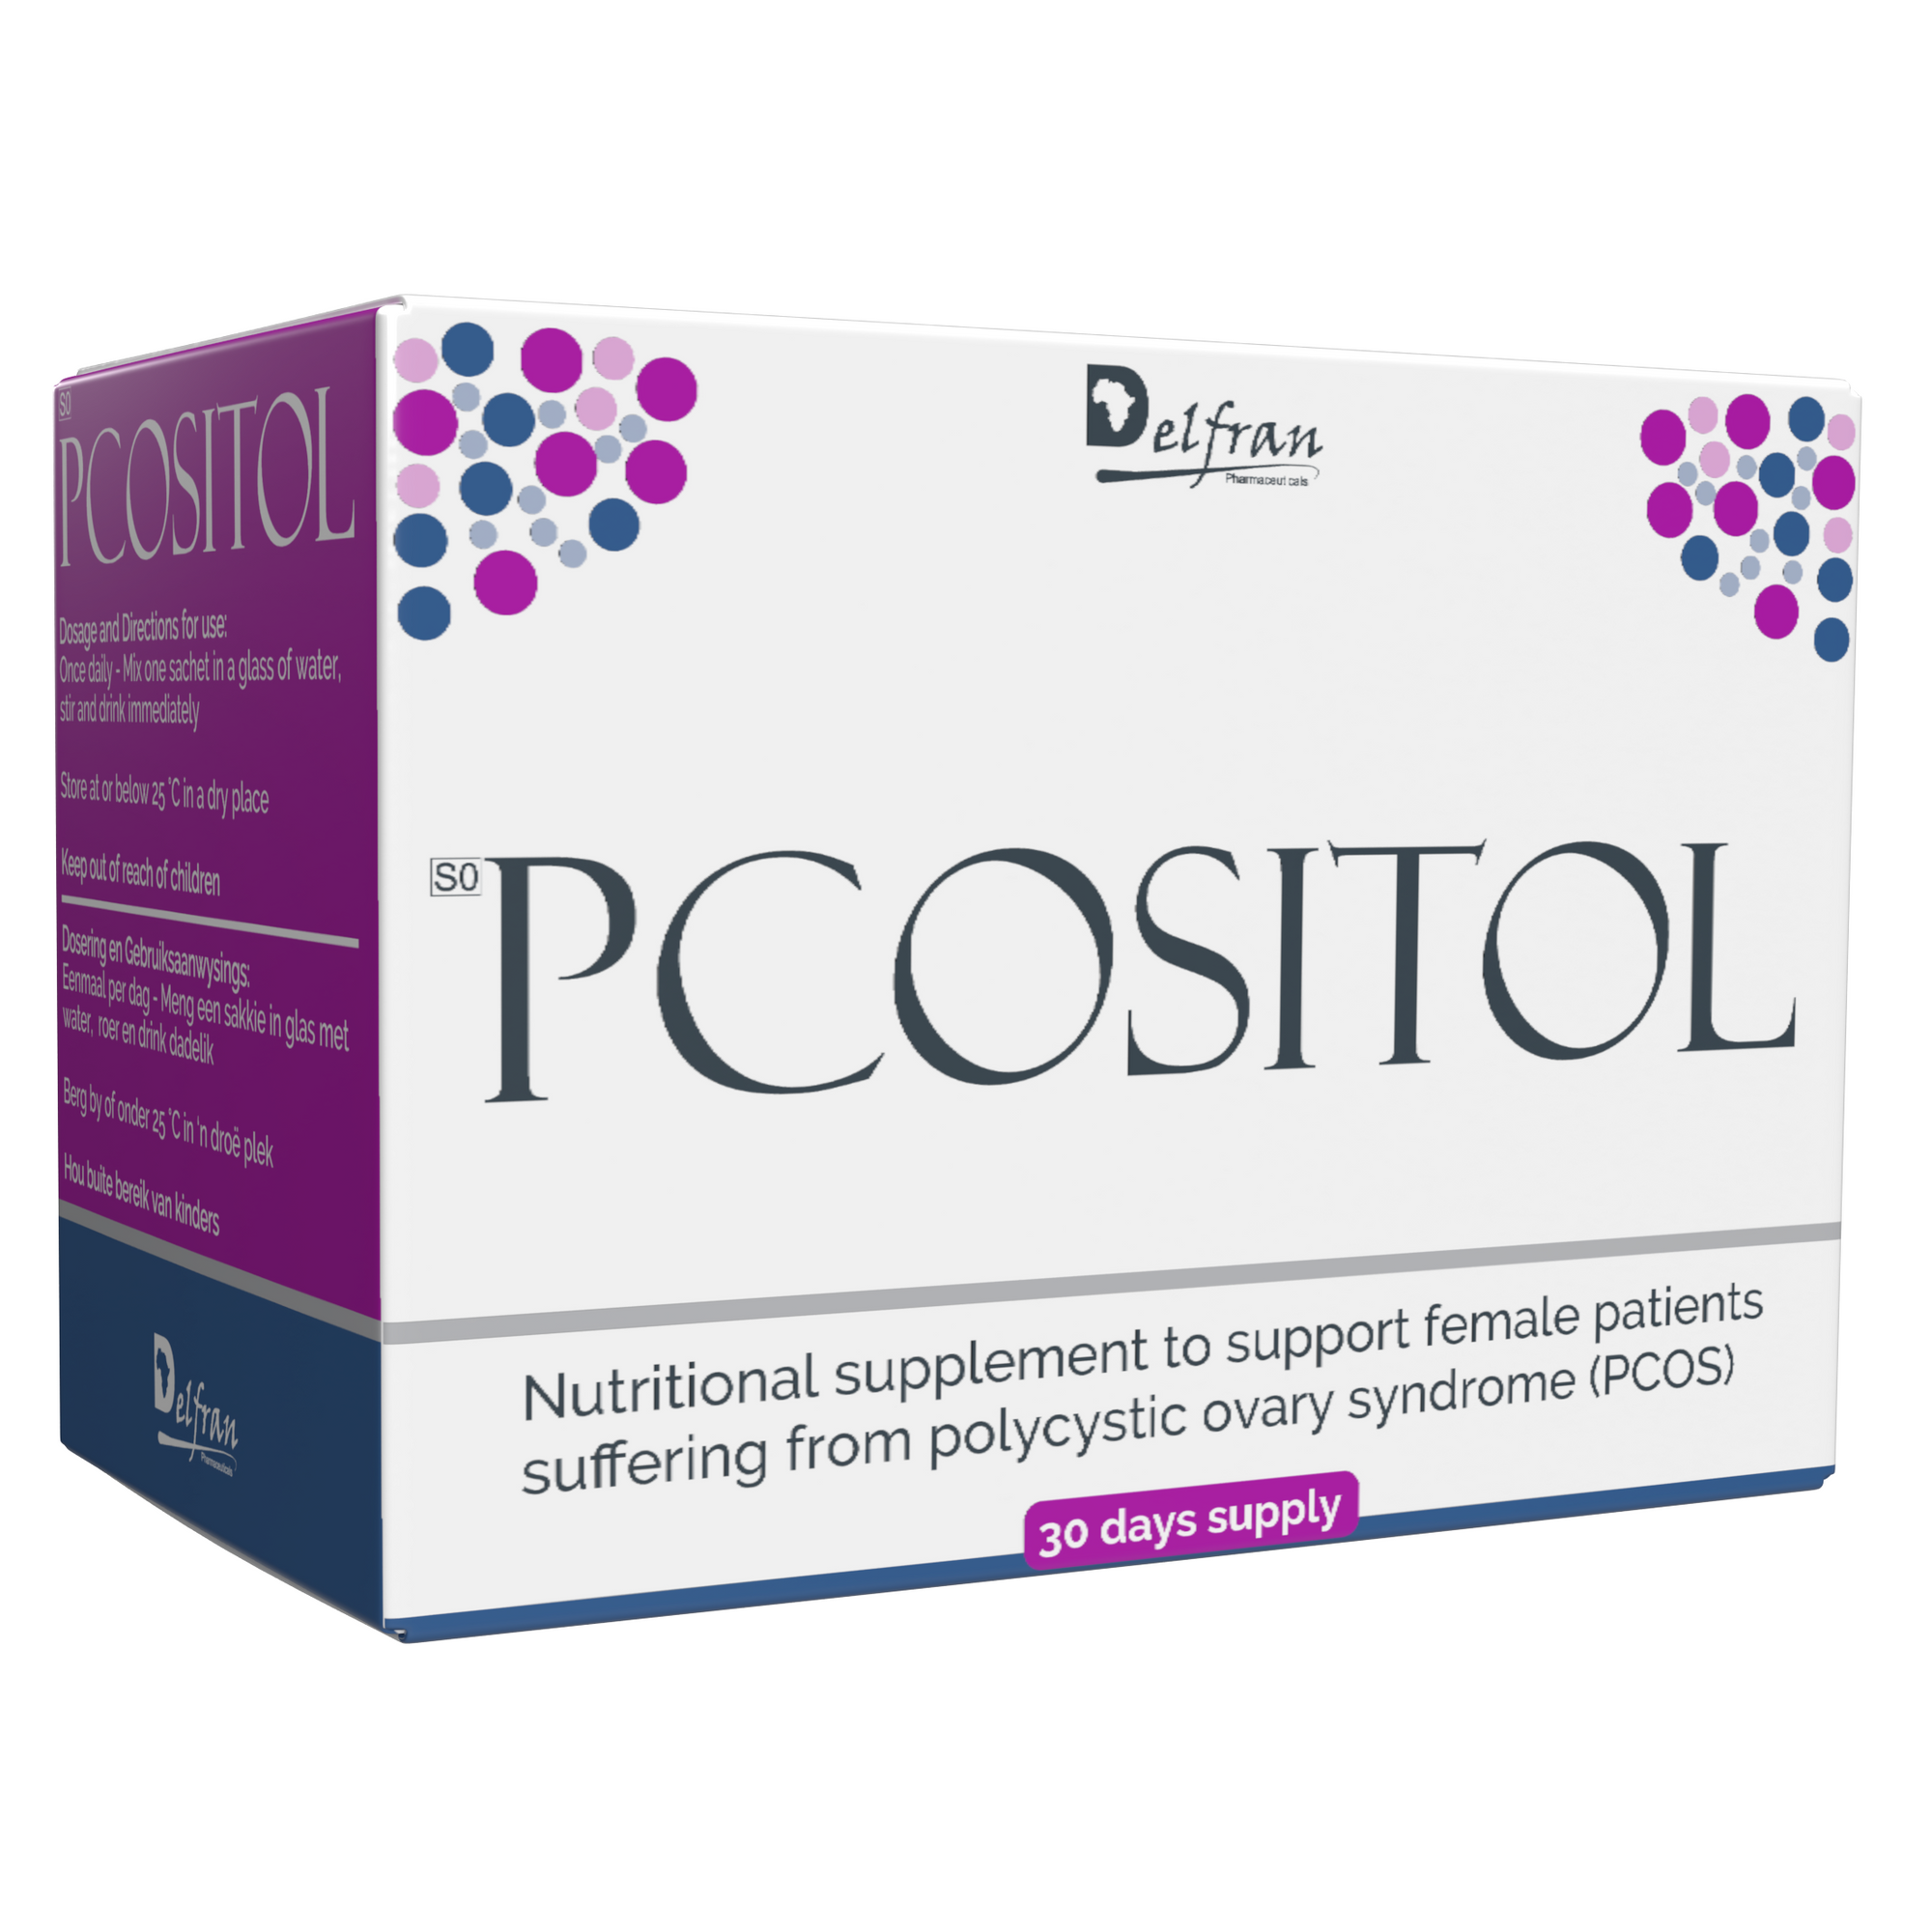 PCOSITOL - 30 days supply